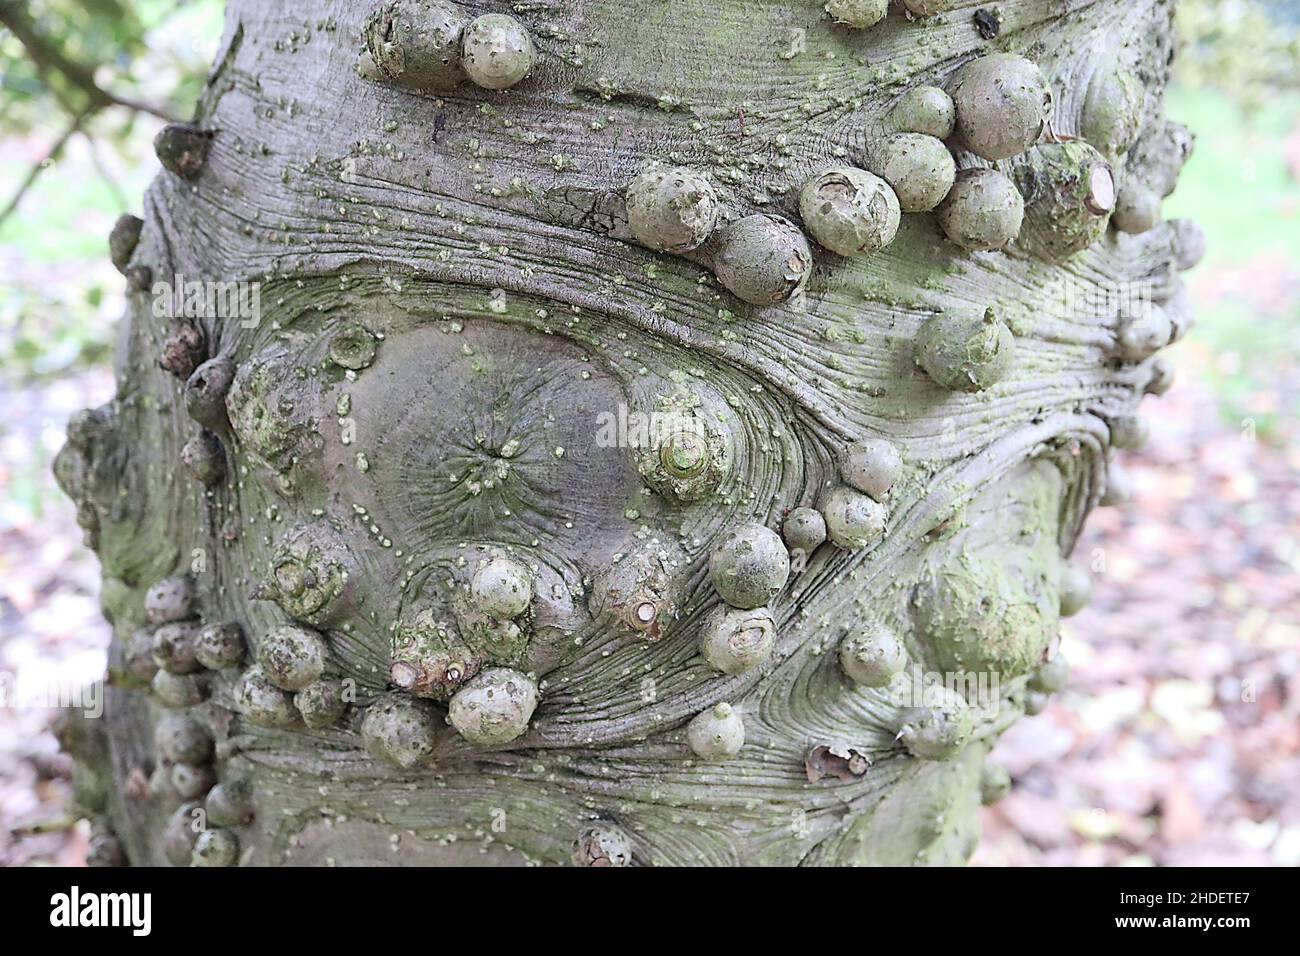 Ilex aquifolium ‘Golden Queen’ holly Golden Queen – buff grey bark with circular whorls and bubbles,  January, England, UK Stock Photo